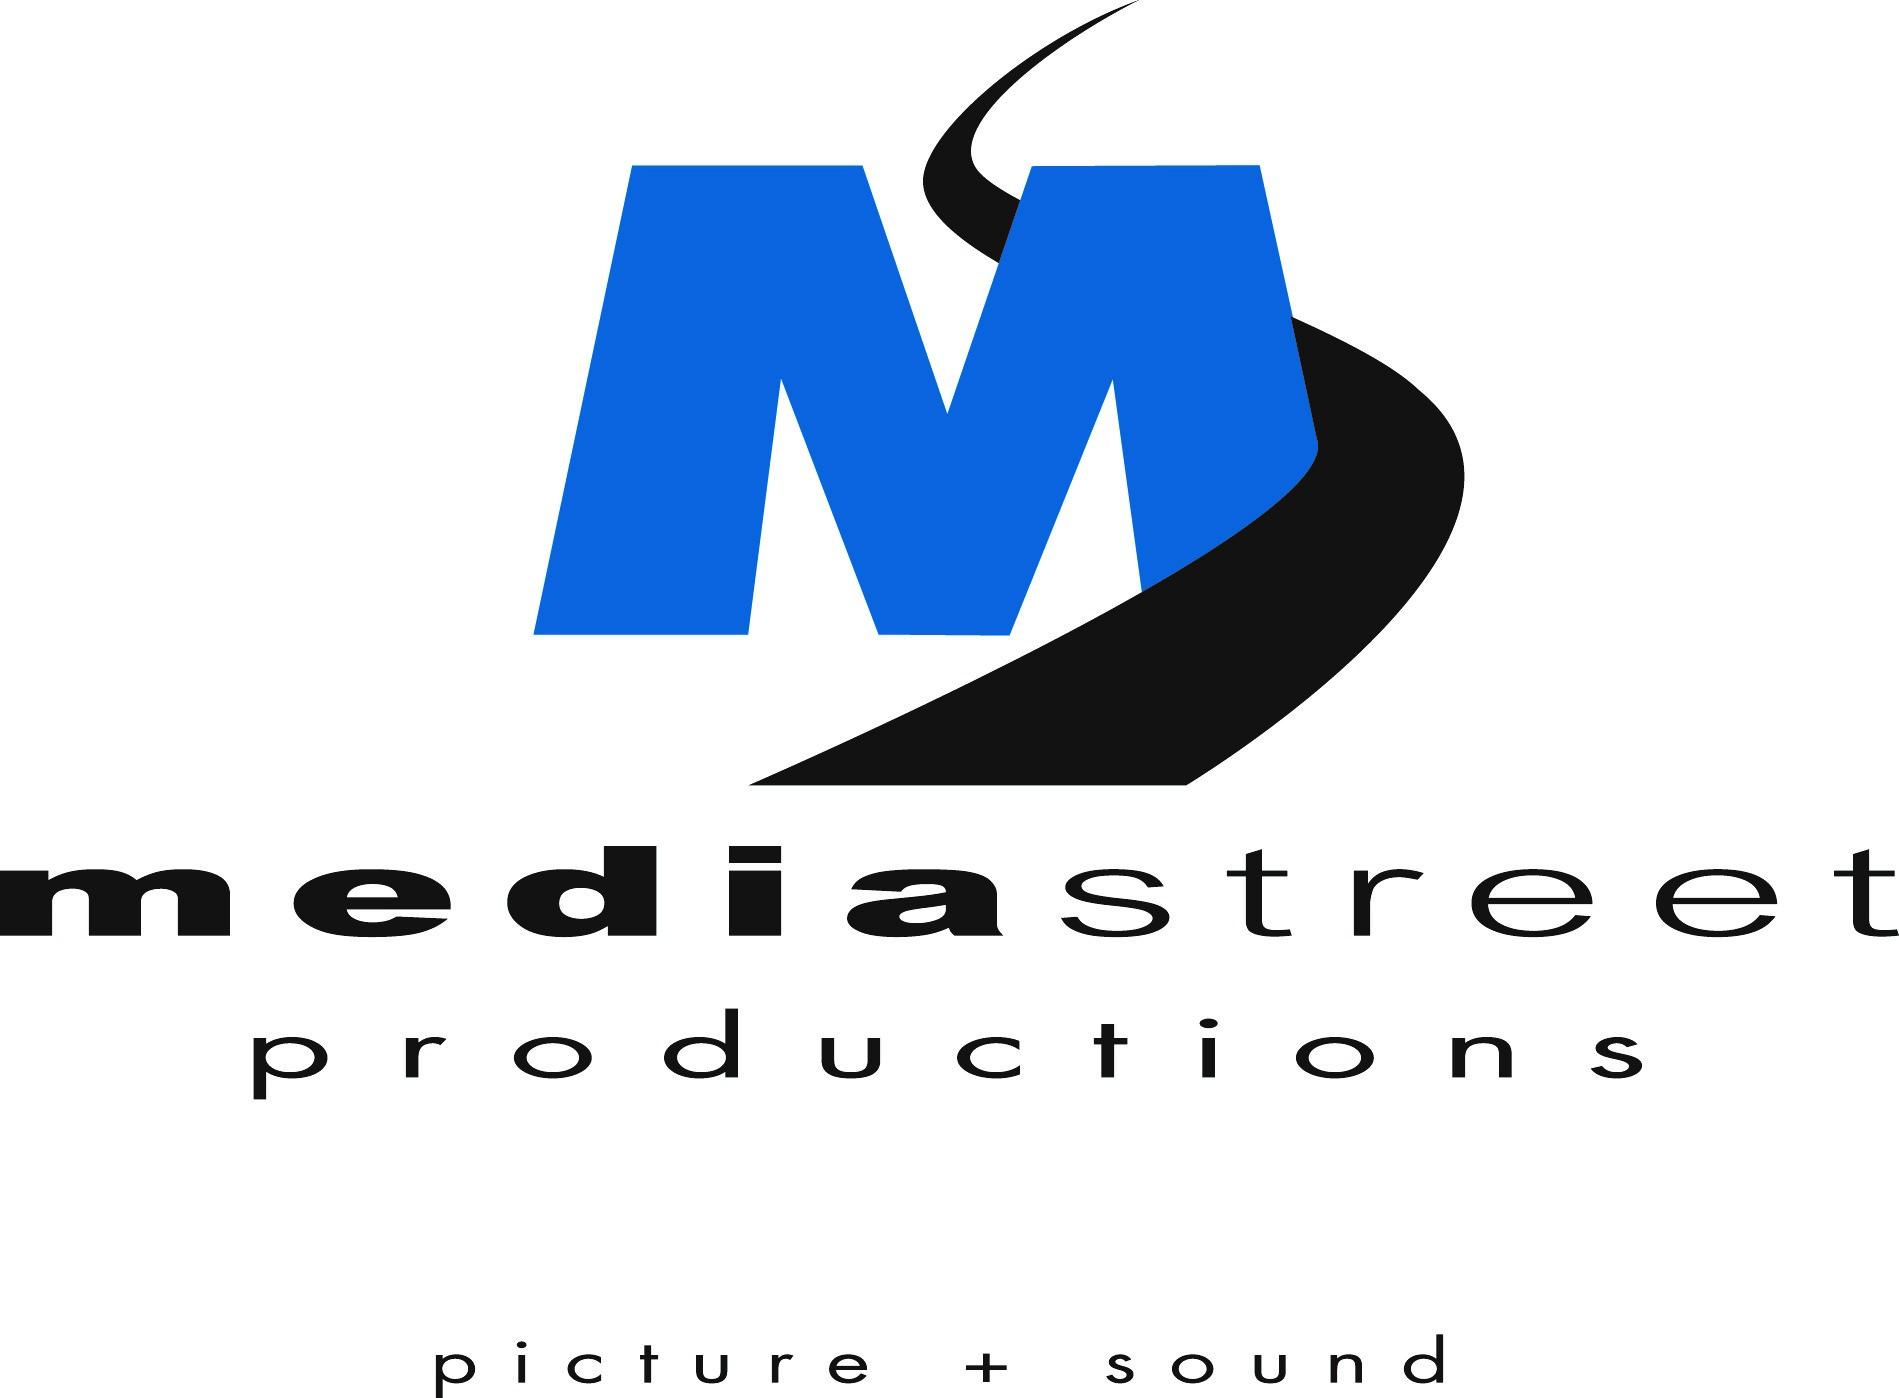 logo of Media Street Productions